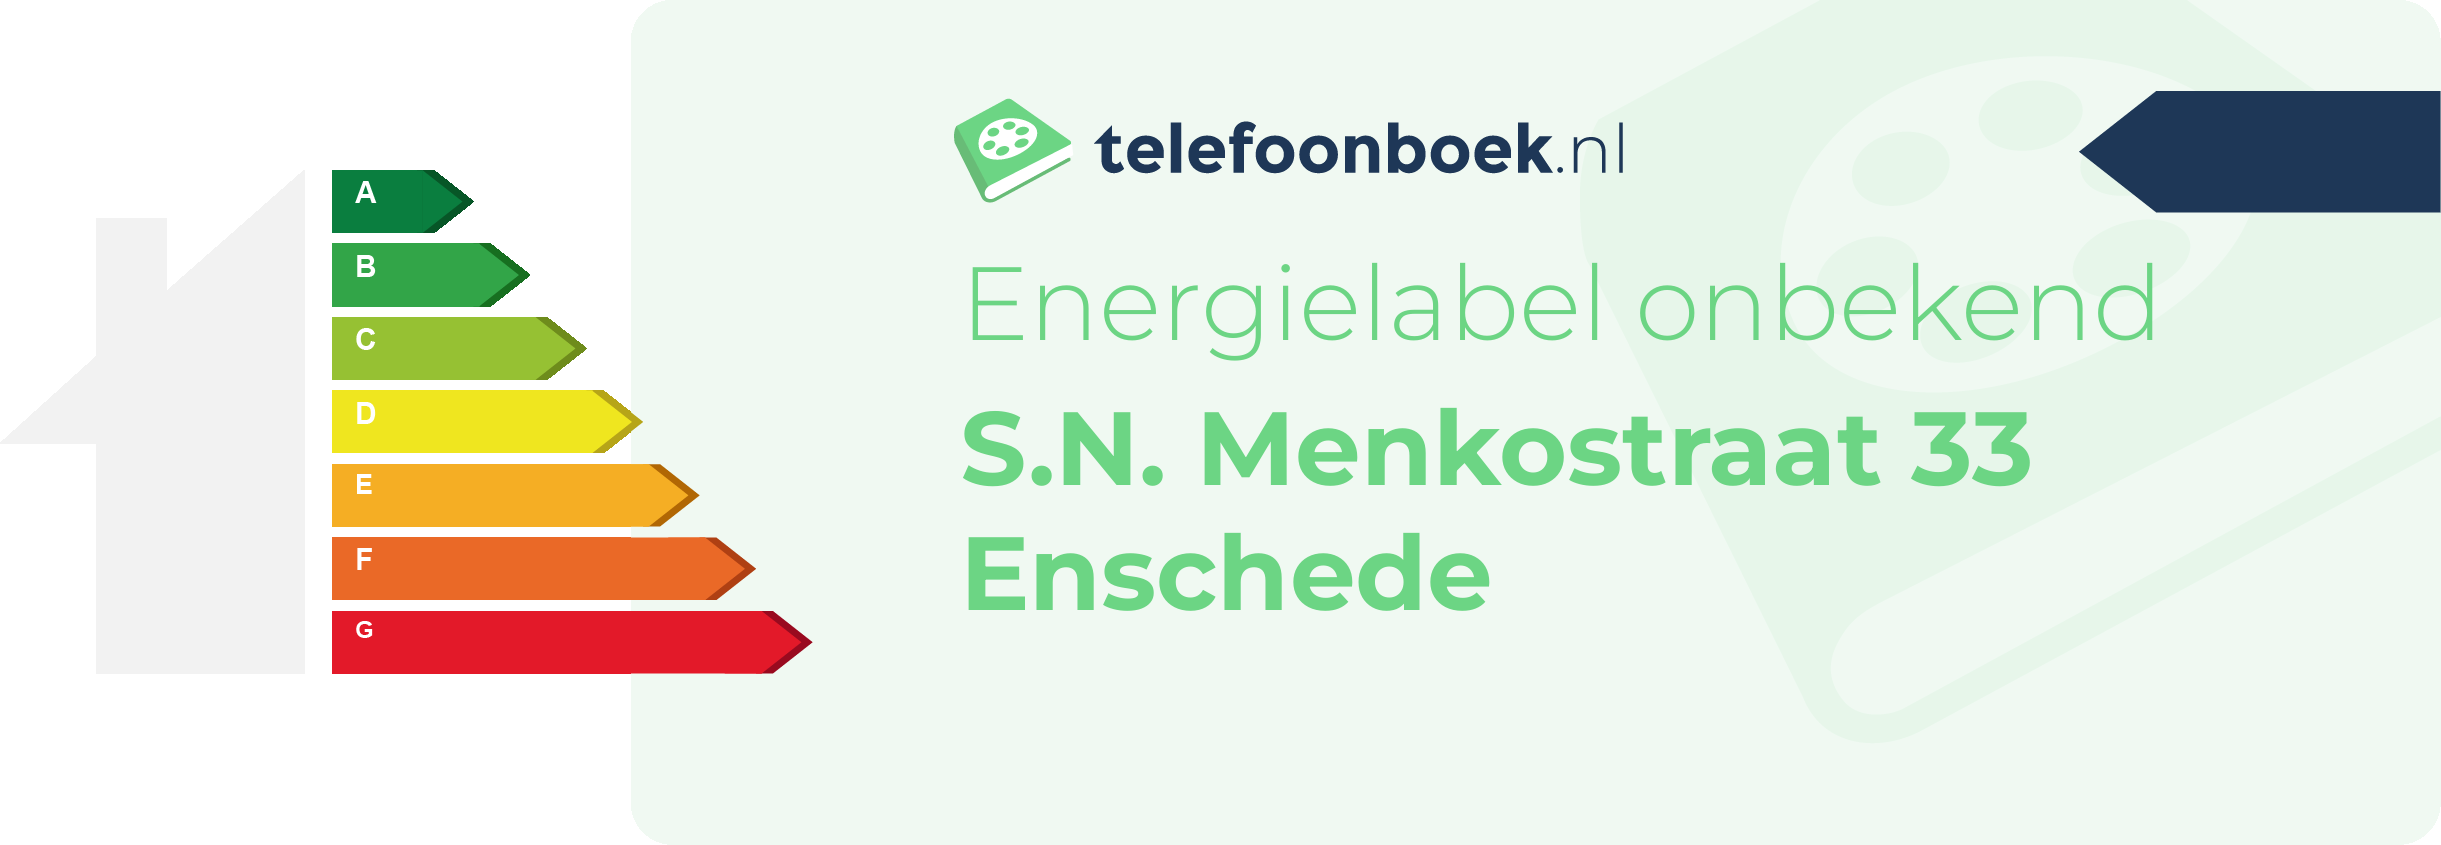 Energielabel S.N. Menkostraat 33 Enschede